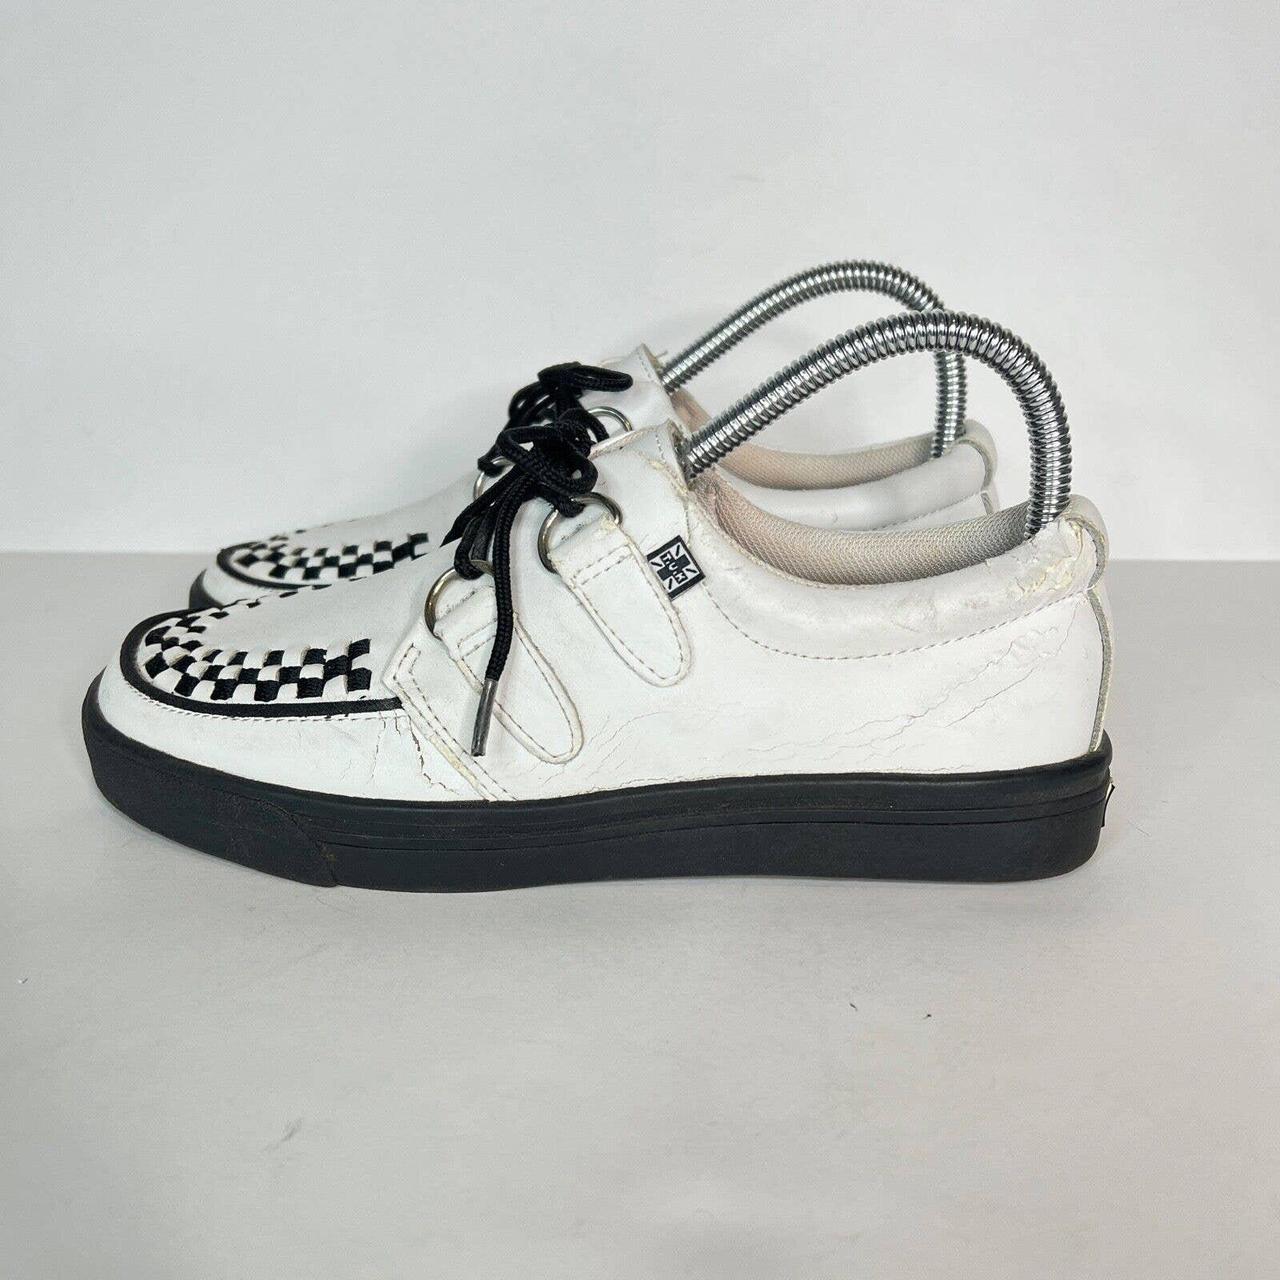 Product Image 2 - T.U.K. Leather Creeper Sneaker Slip